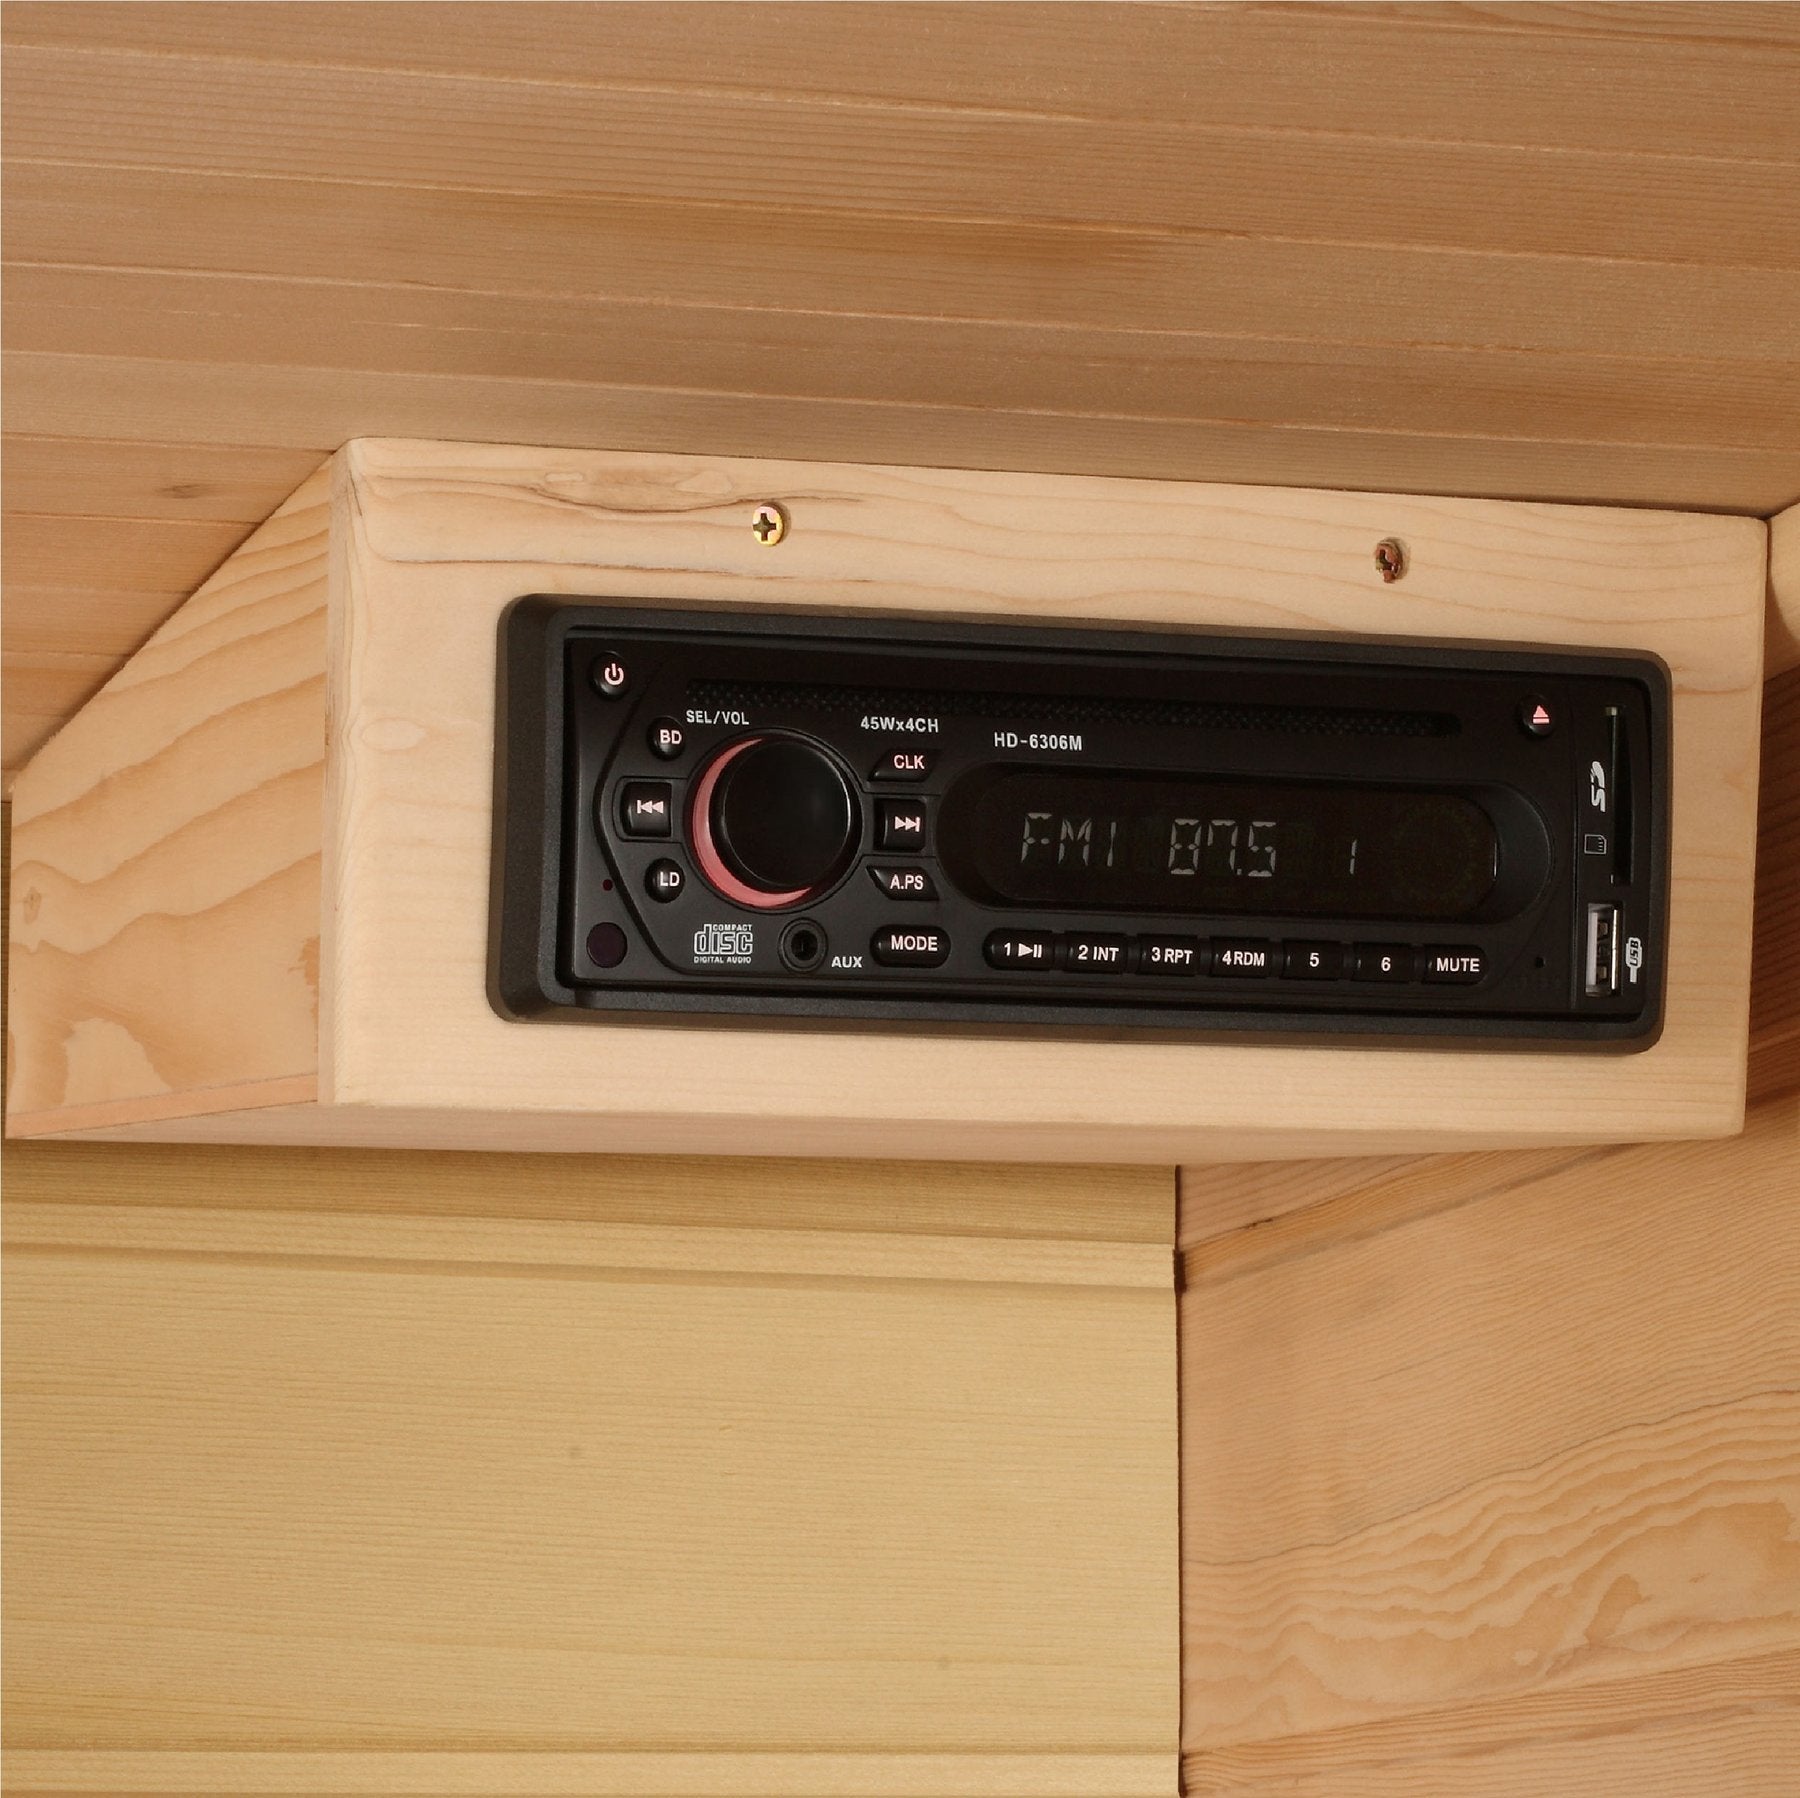 Maxxus 2 Person Indoor Low EMF FAR Infrared Sauna with Canadian Red Cedar / "Calmspas50" for $50 Discount